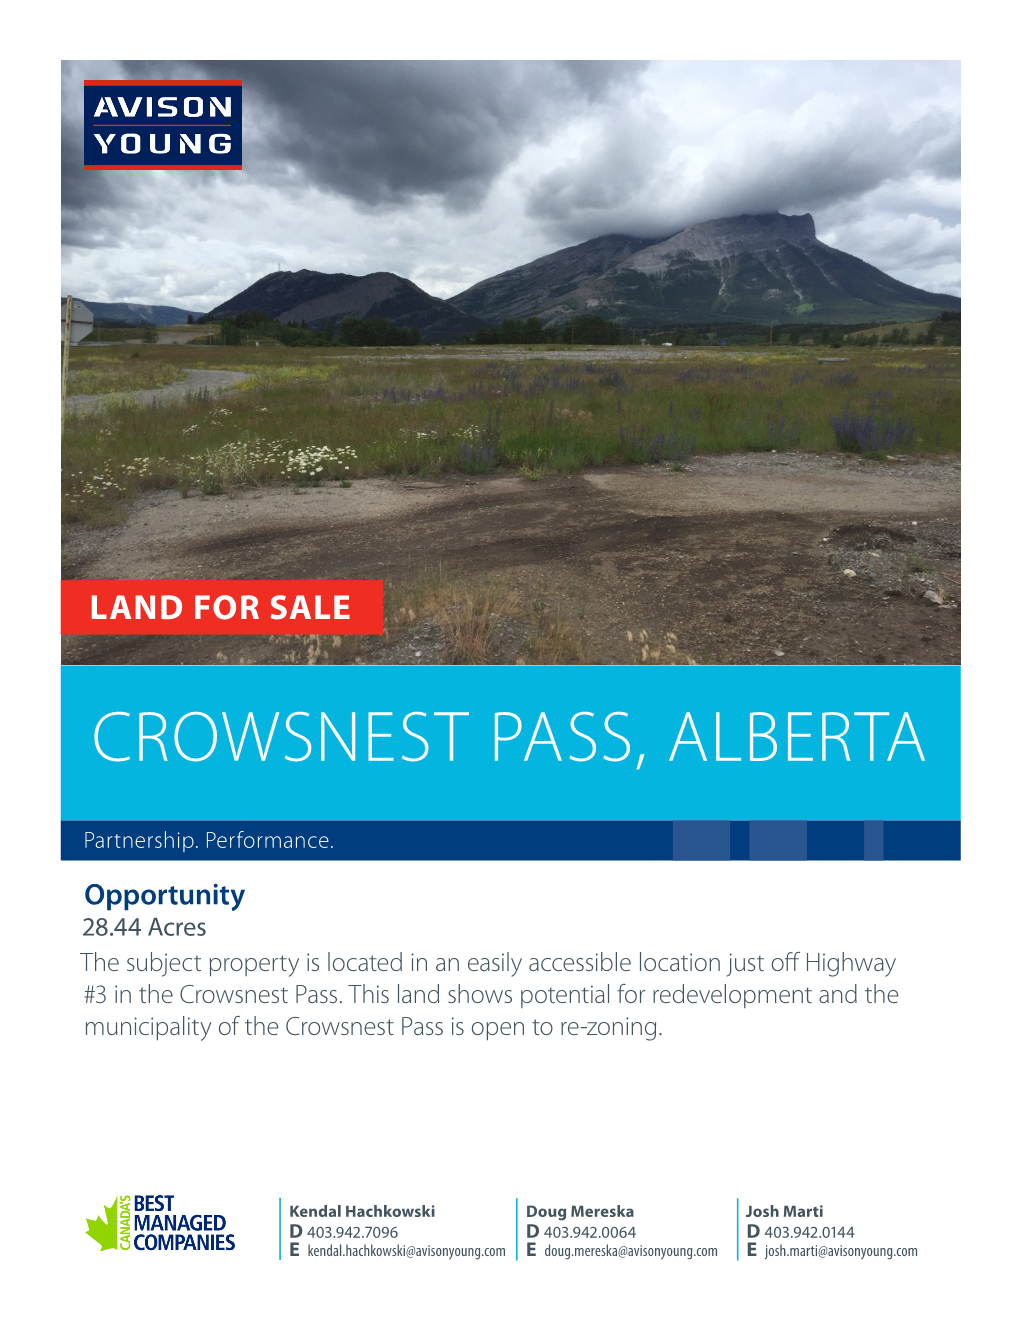 Crowsnest Pass, Alberta